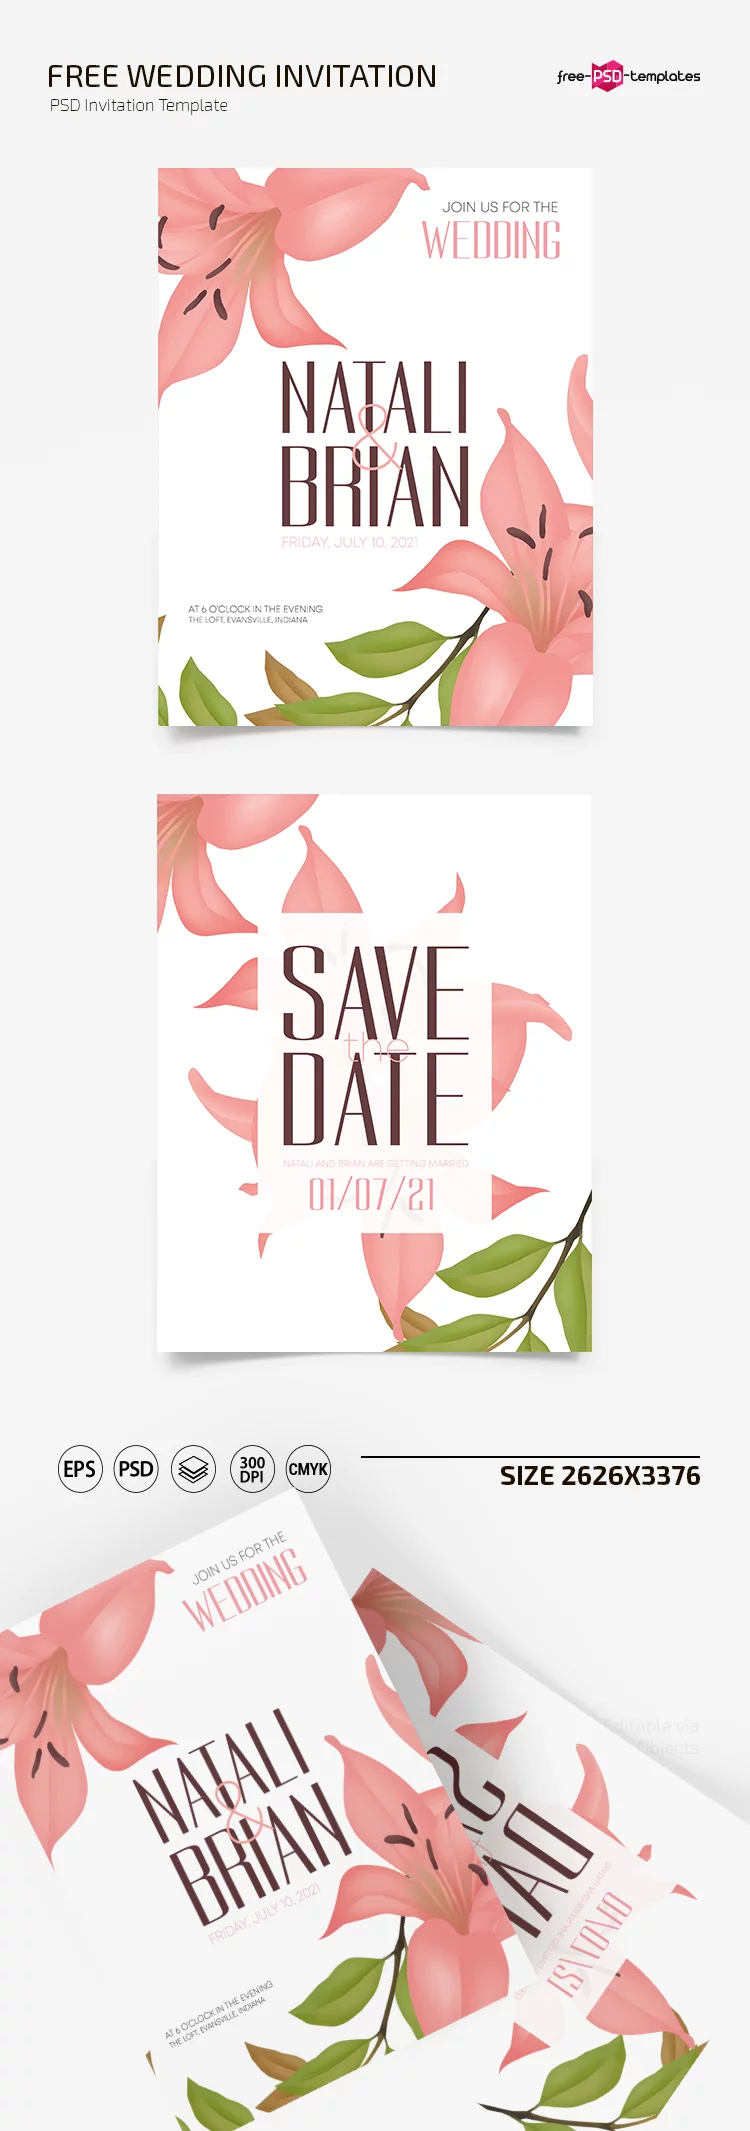 Free Wedding Invitation Card Template PSD & Vector